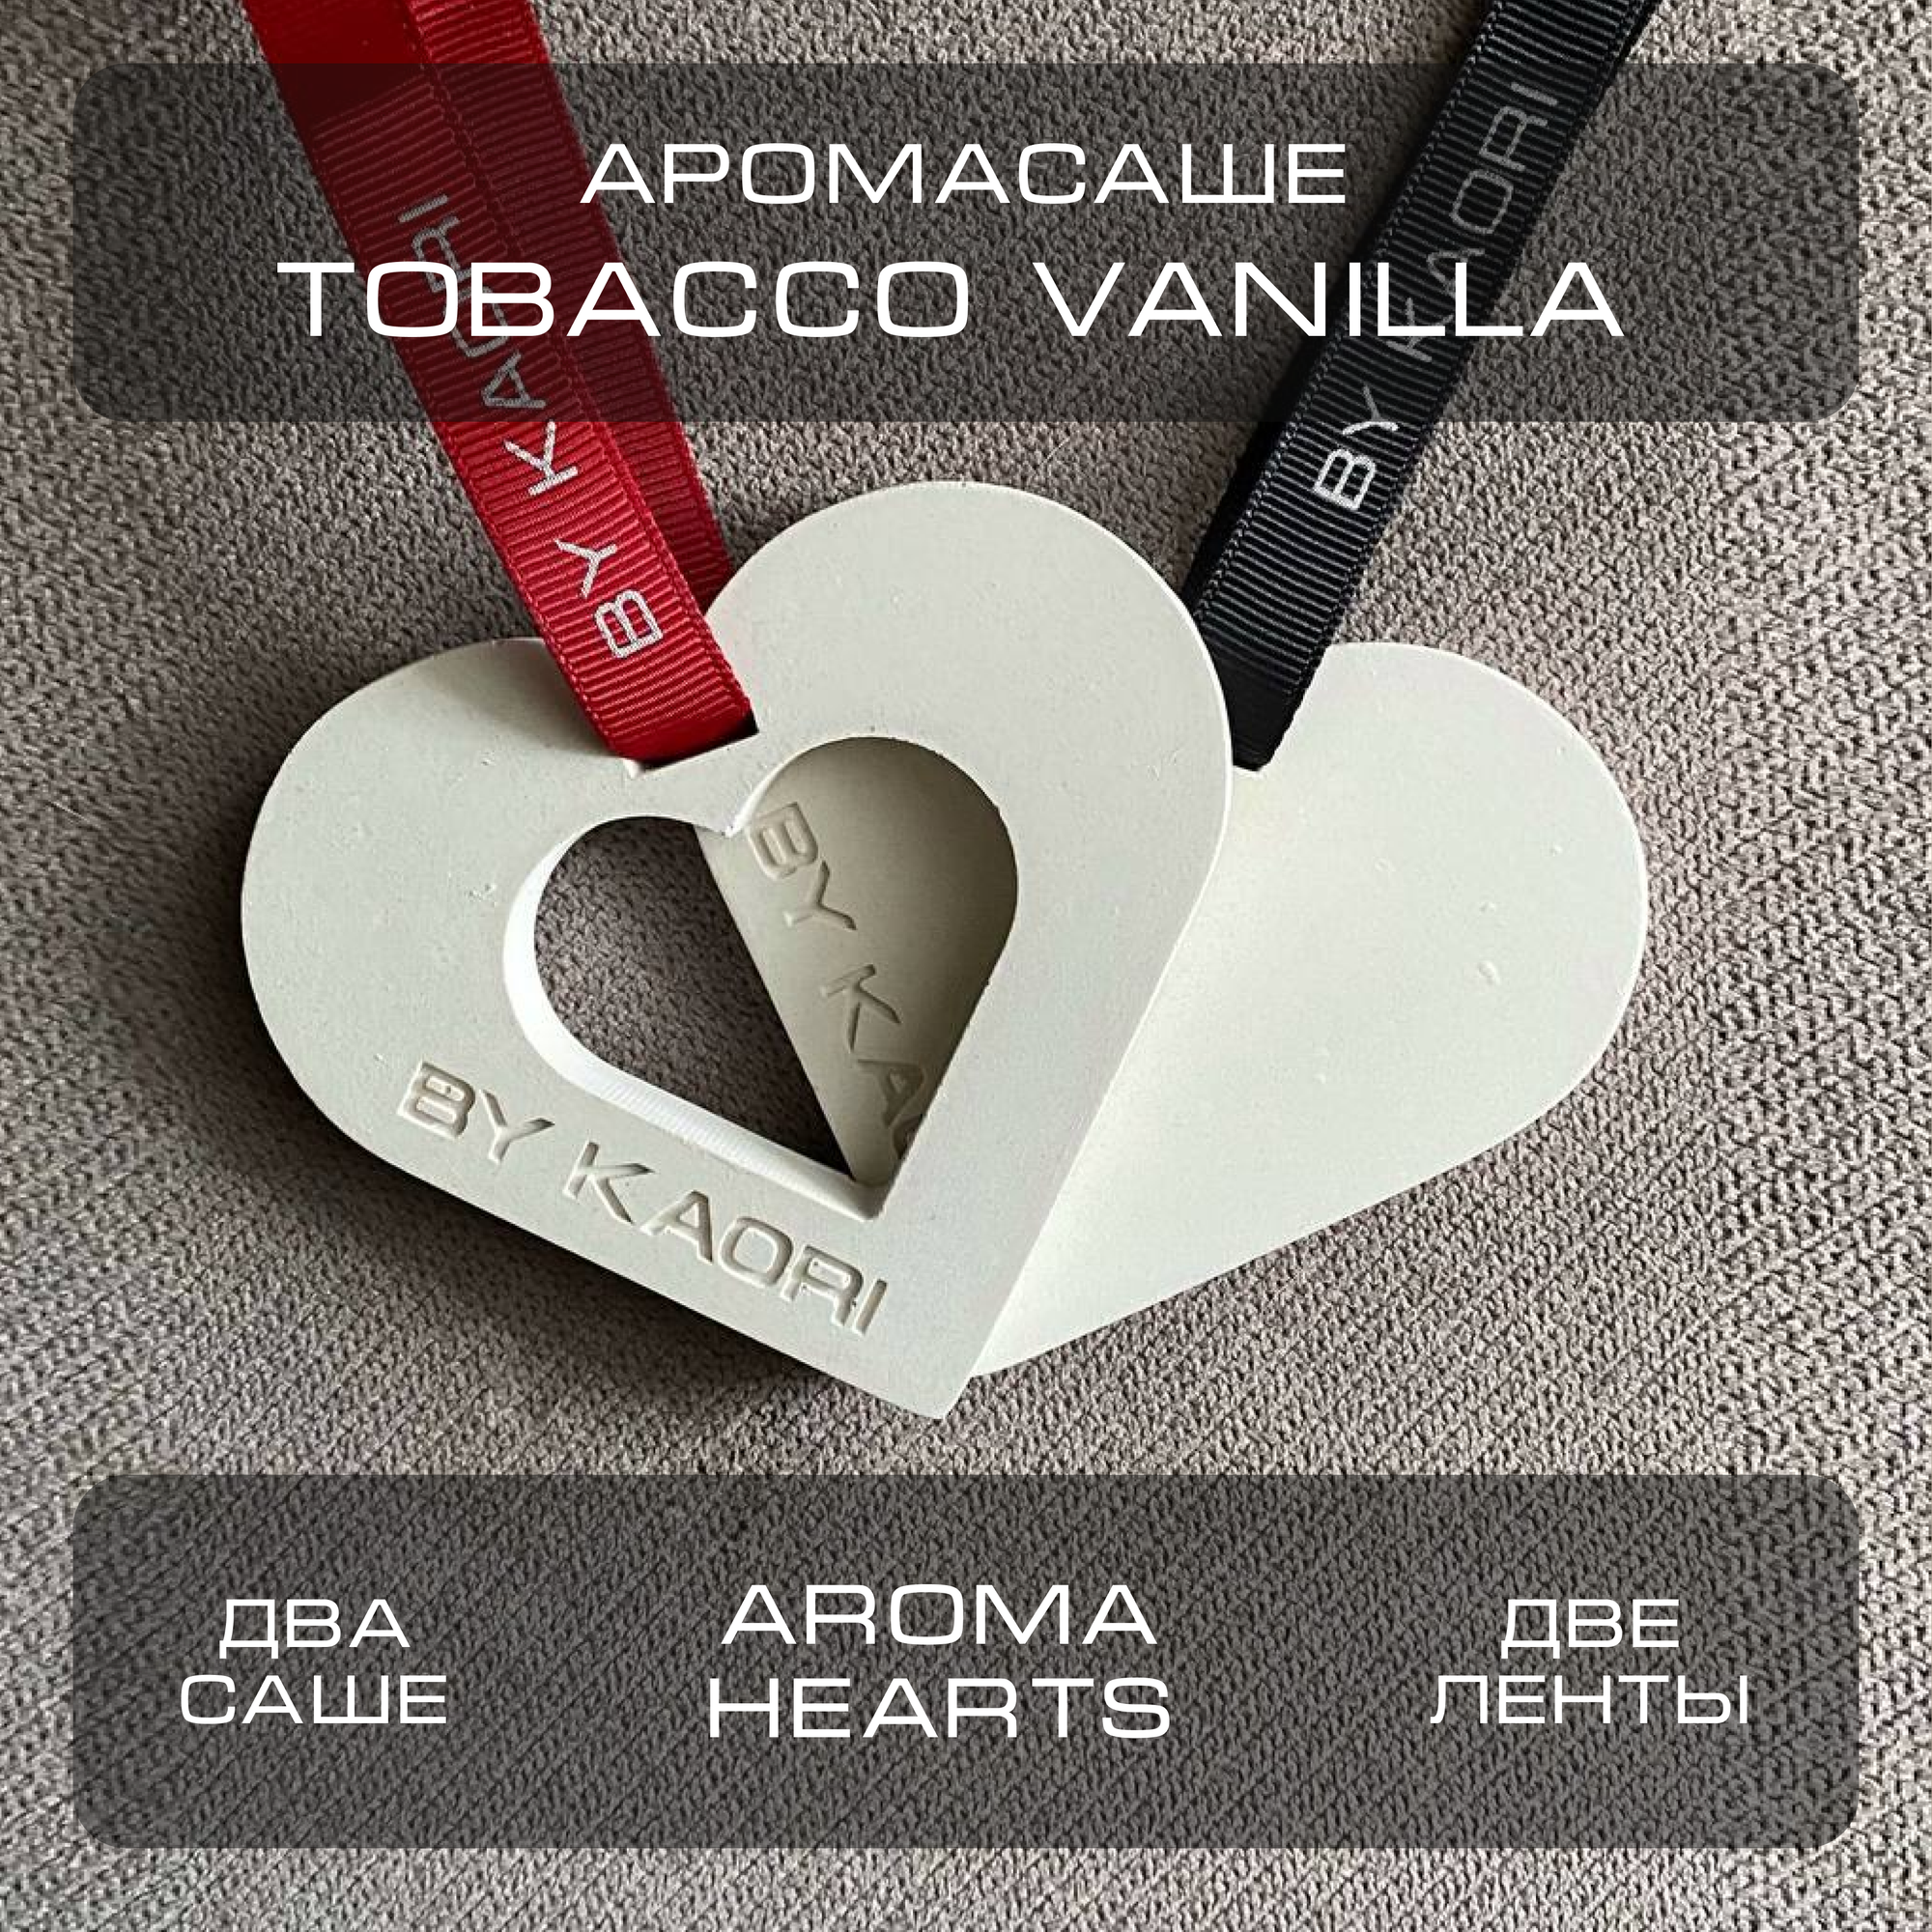 Комплект ароматических саше BY KAORI AROMA HEARTS аромат TOBACCO VANILLA (Табак Ваниль)